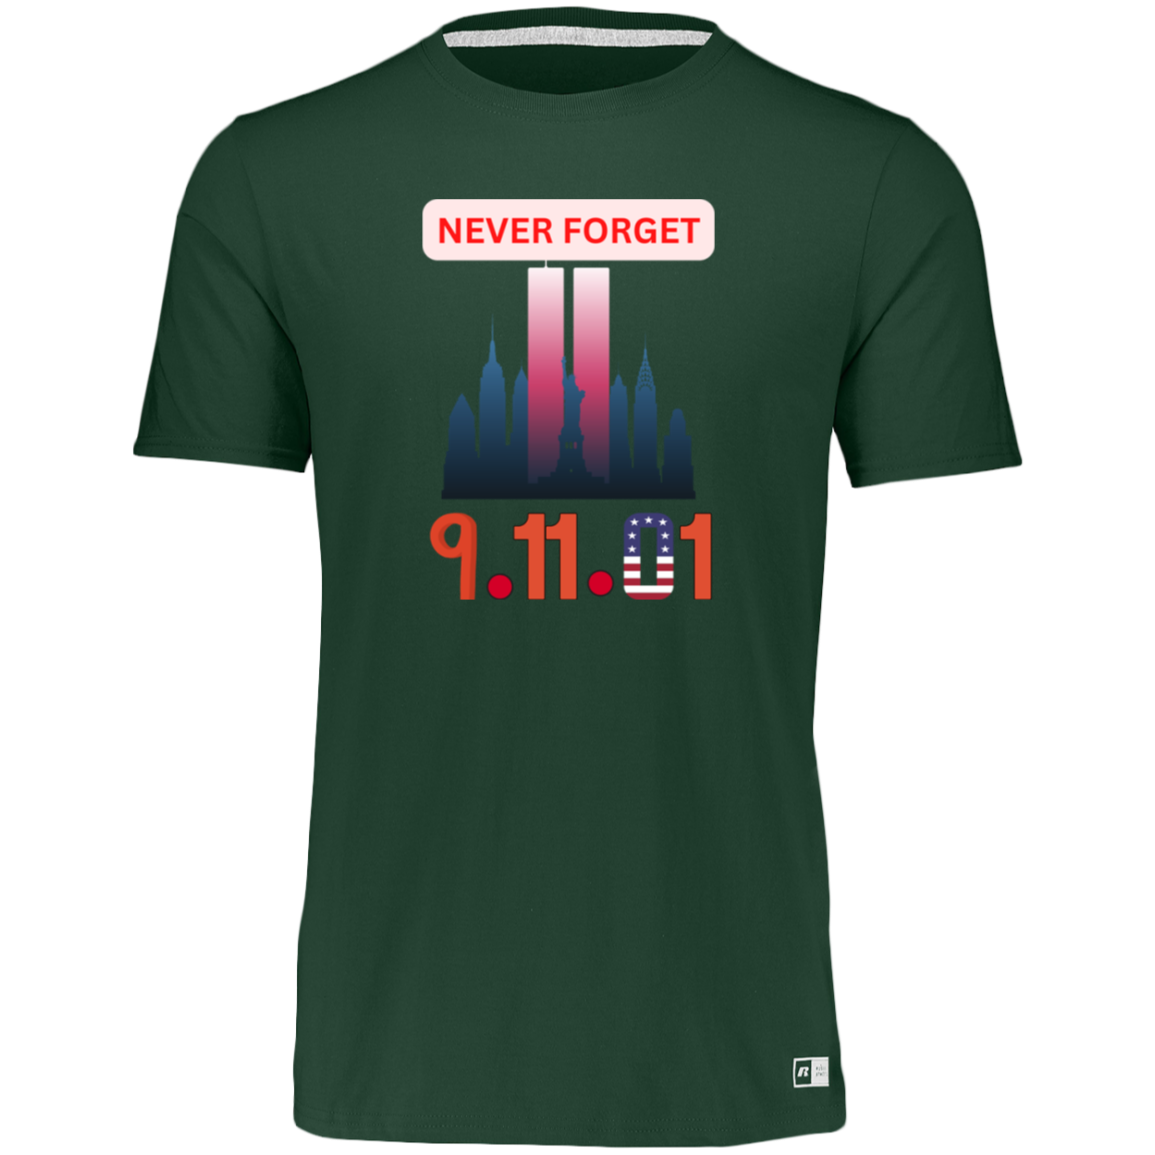 Unisex Dri-Power Tee--Never Forget 9-11-01